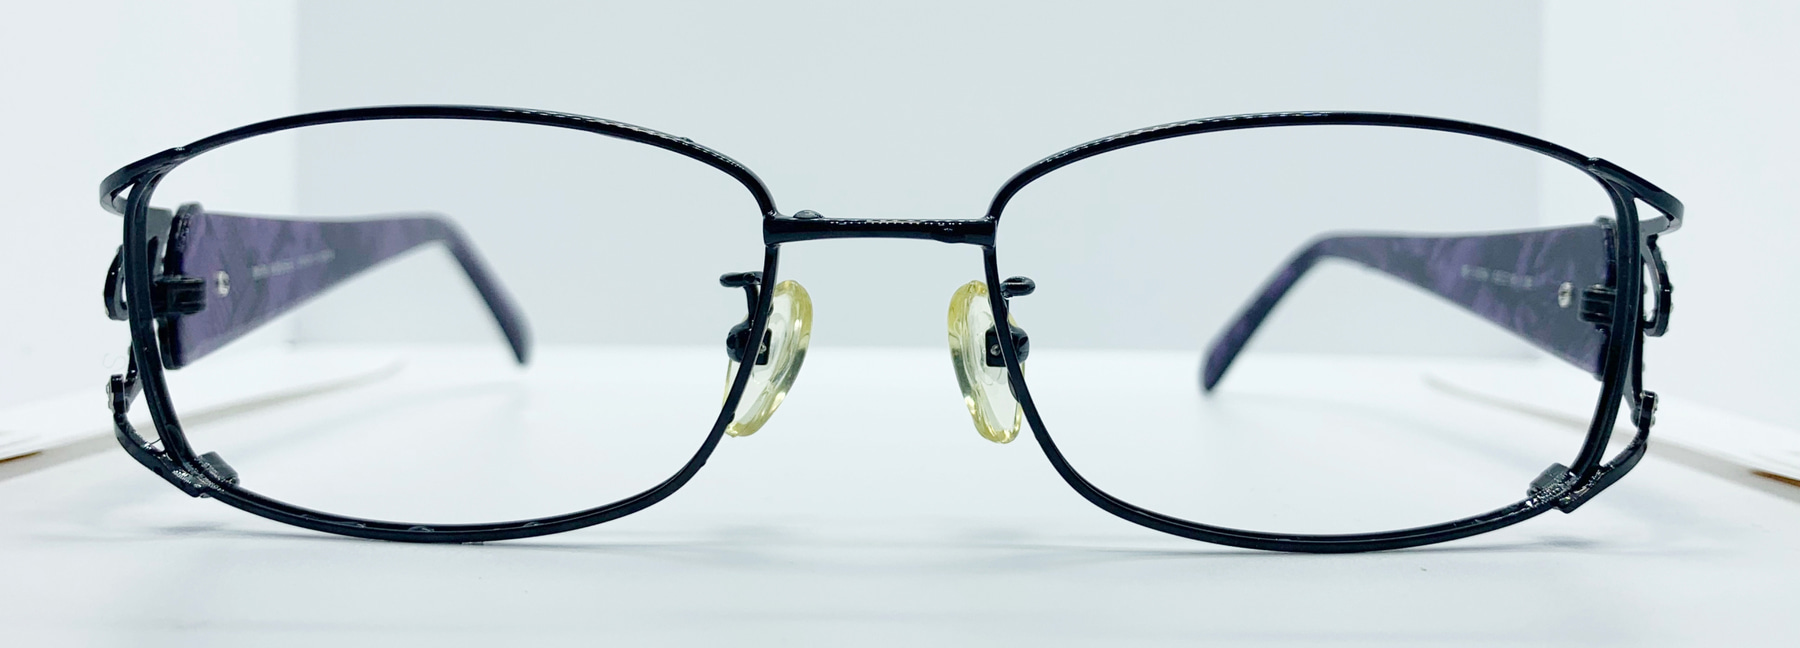 MINIHOUSE M-1058, Korean glasses, sunglasses, eyeglasses, glasses